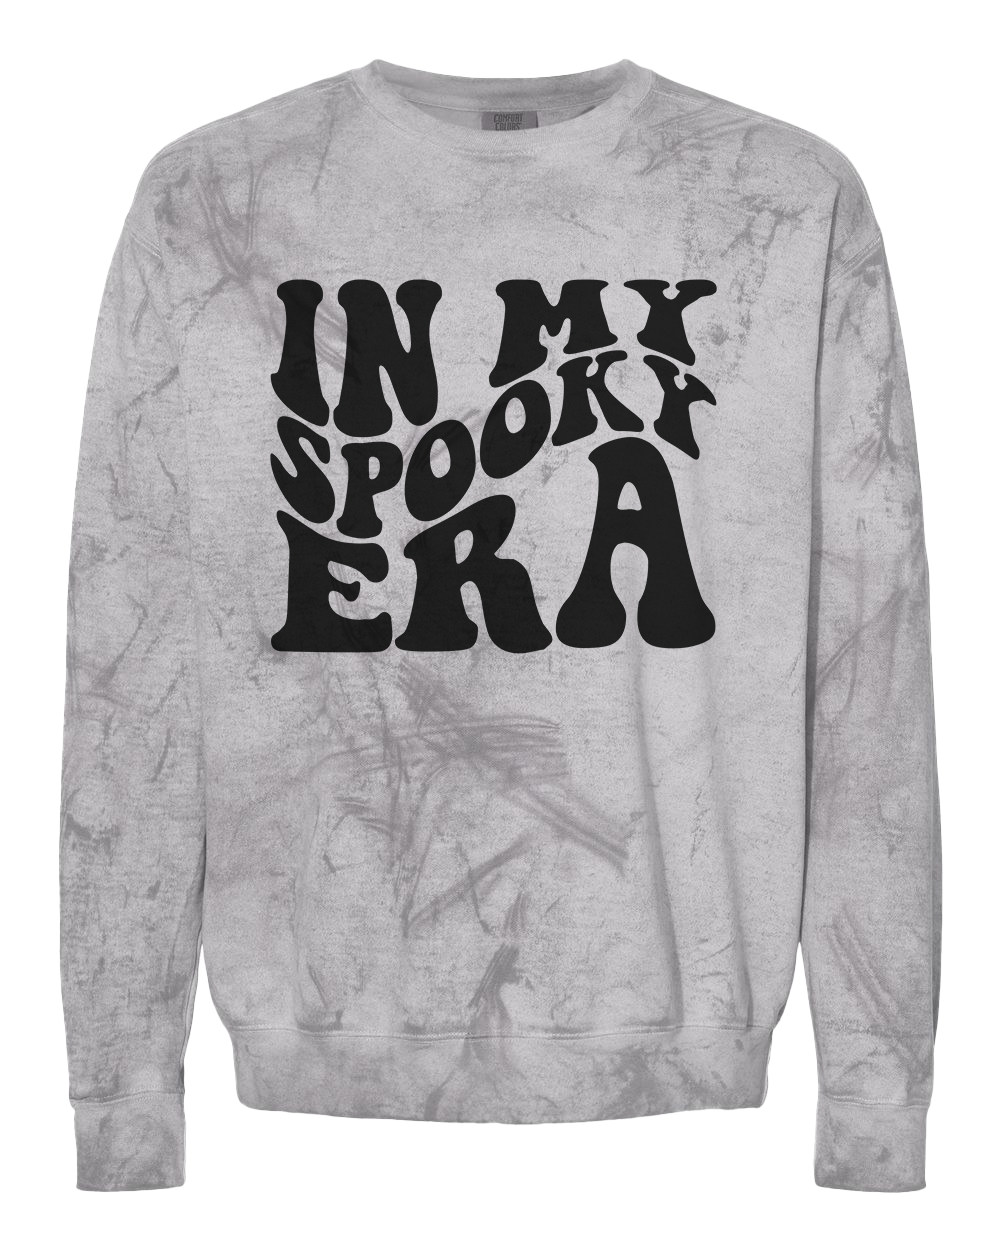 In My Spooky Era Crew Sweatshirt - Smoke